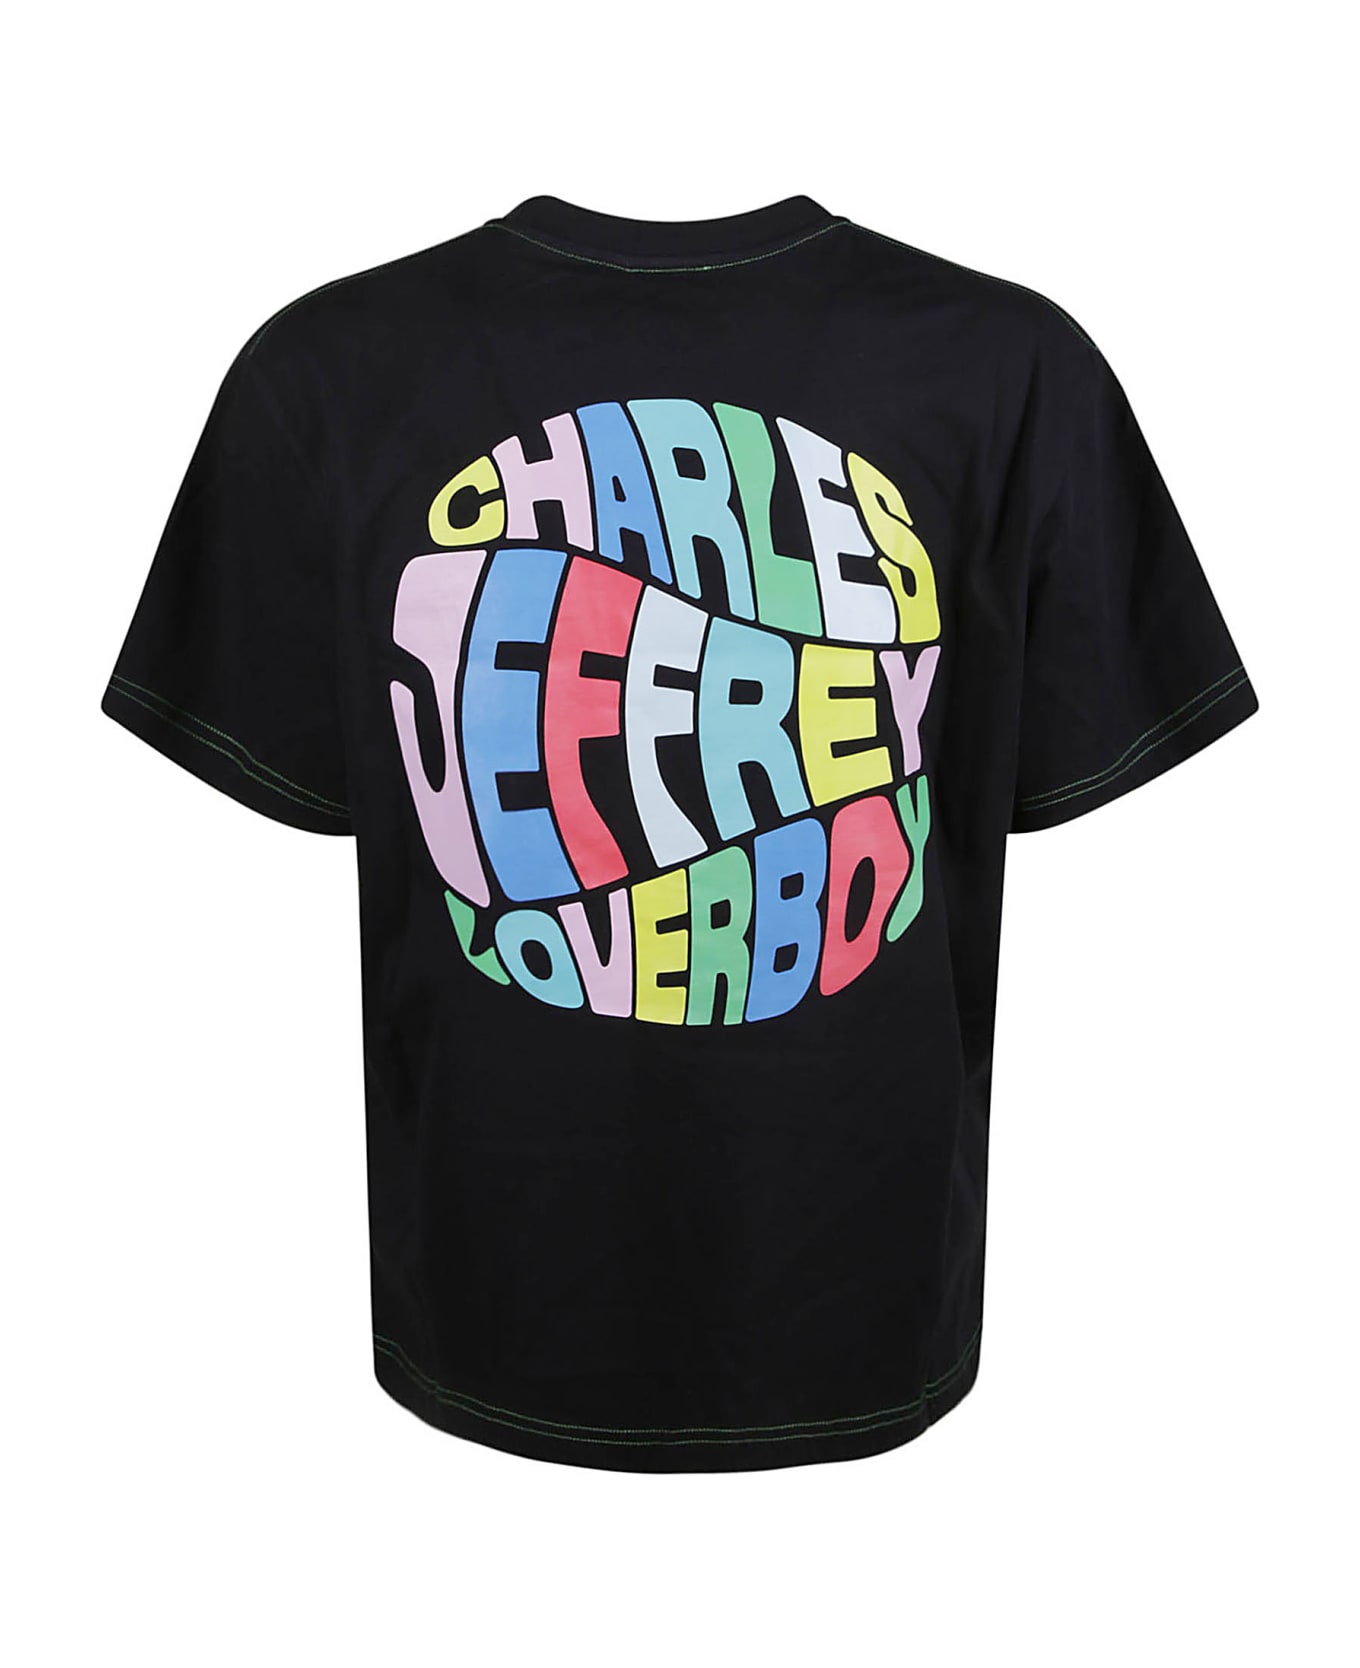 Charles Jeffrey Loverboy Logo Print T-shirt - Black  シャツ